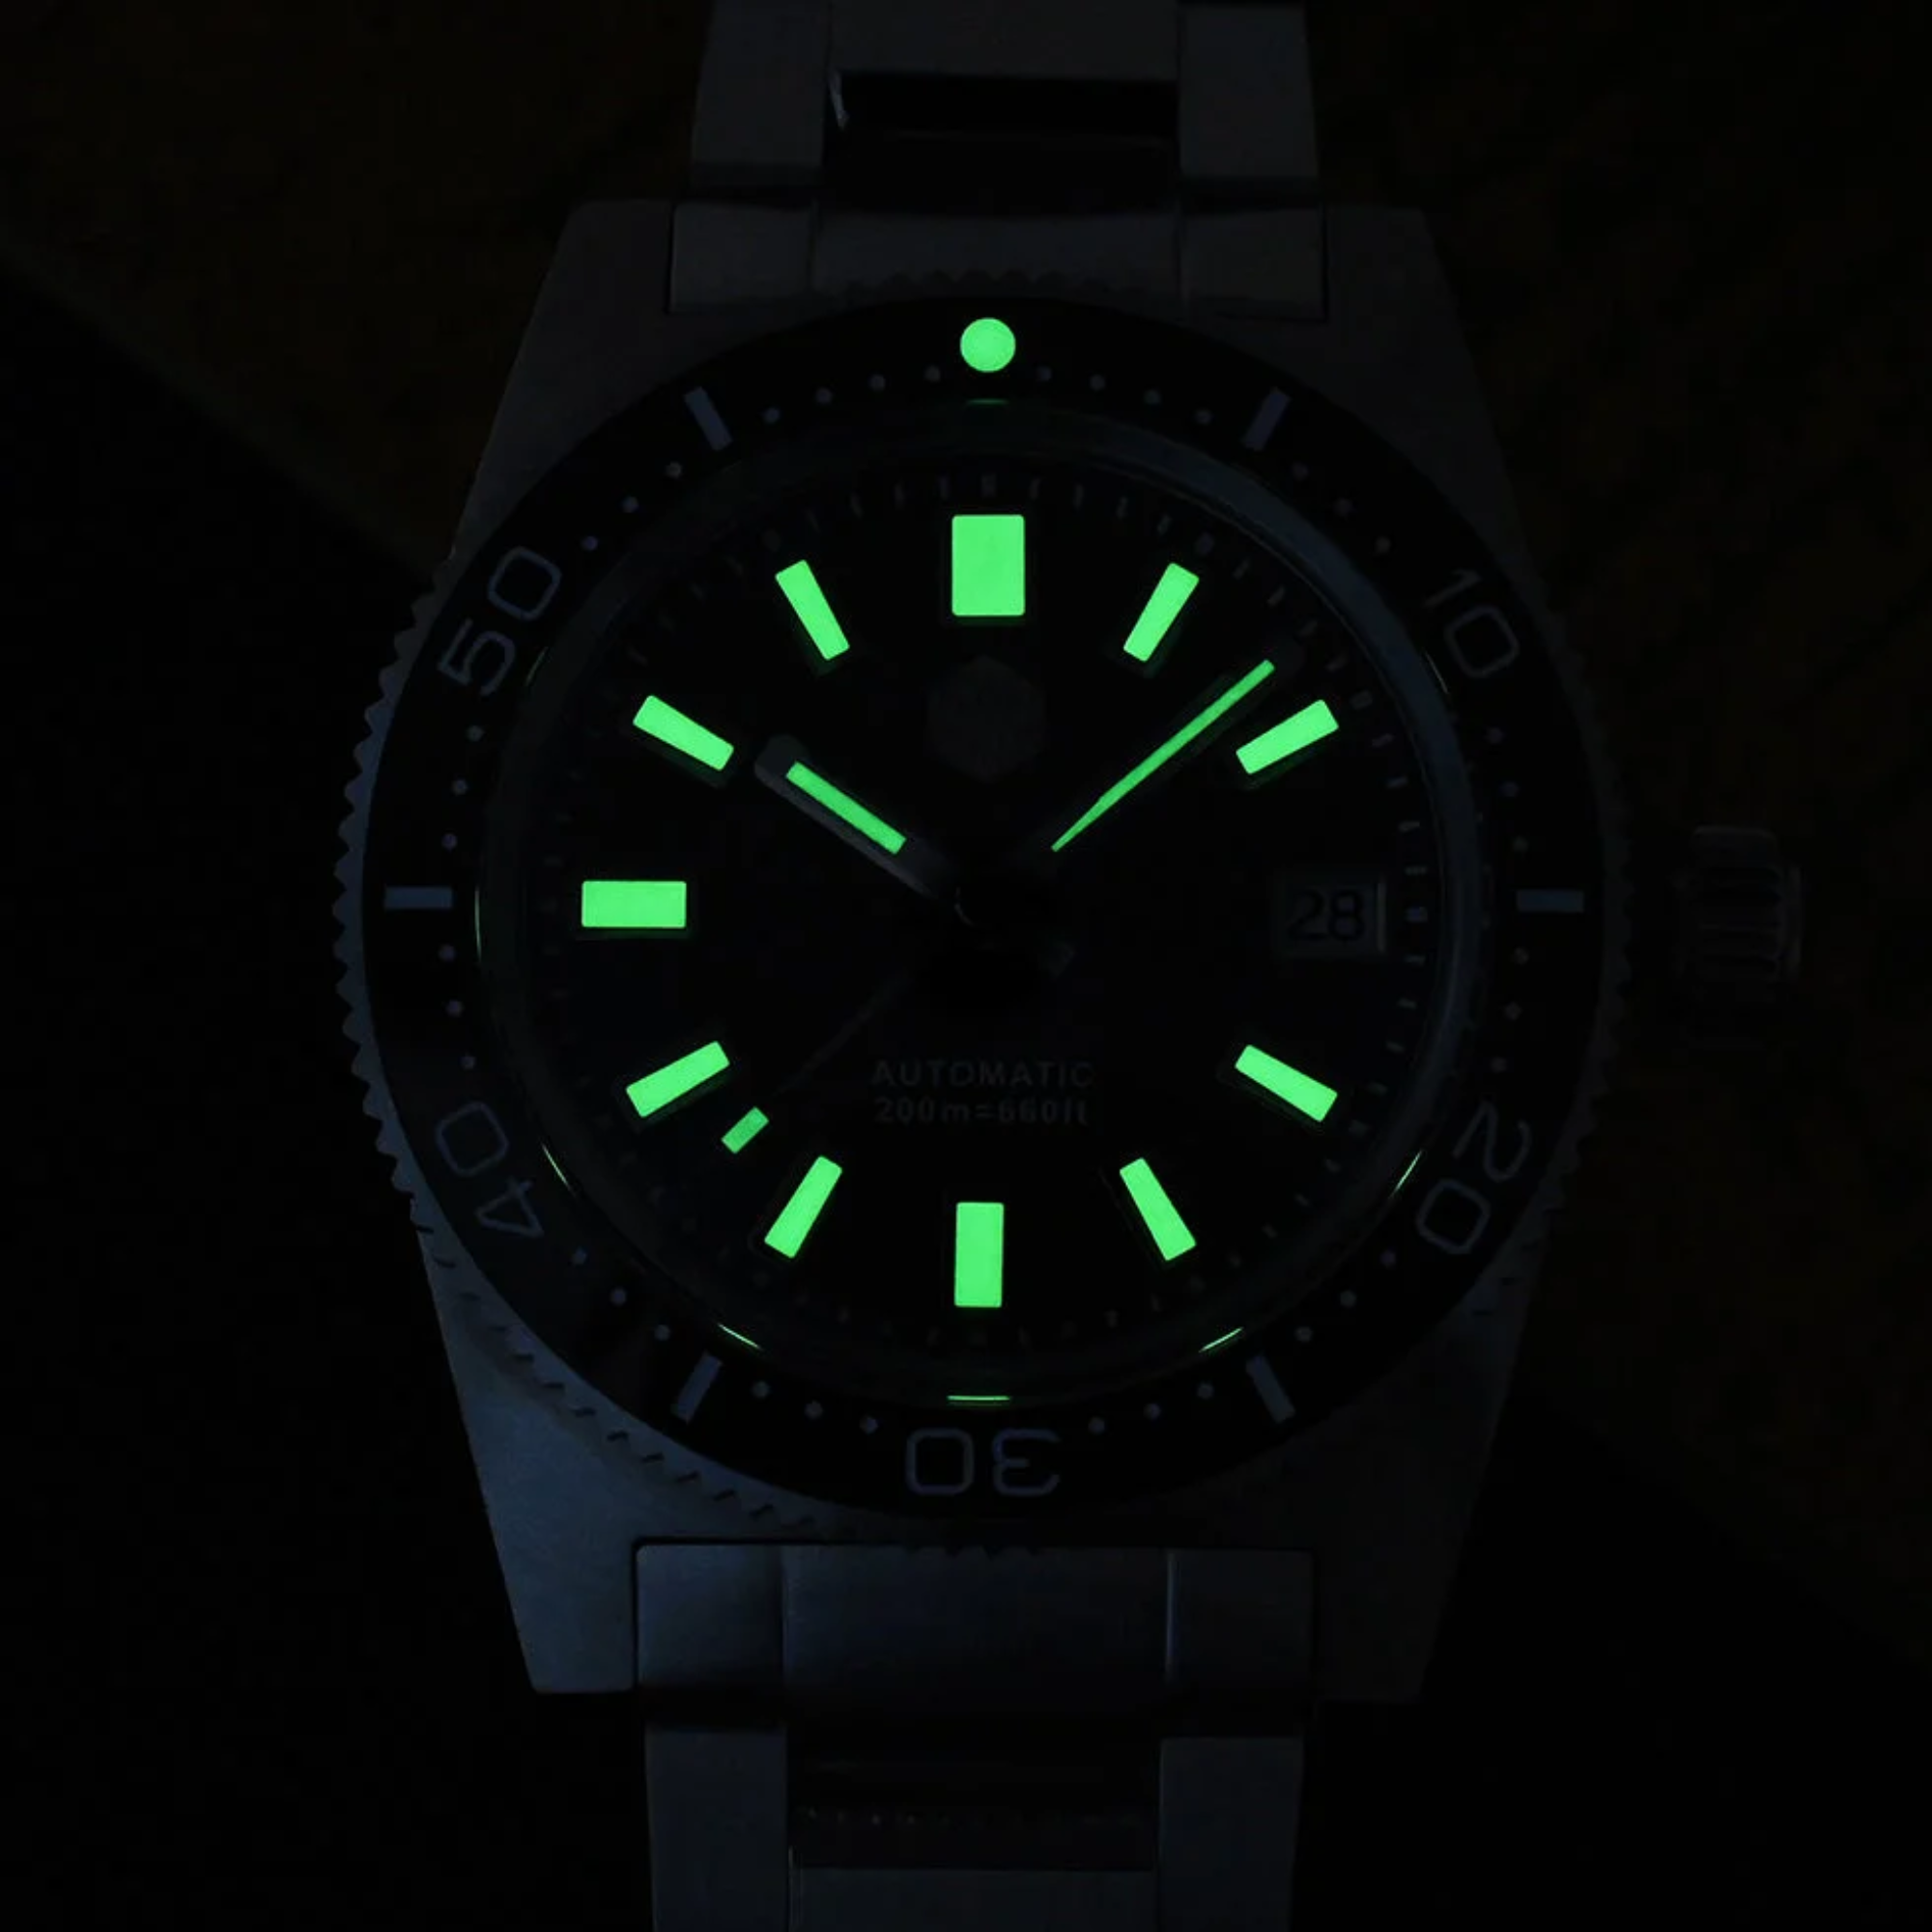 San Martin New 62mas 37mm Diver Mens Watch SN007-GX - SW200 san martin watches india online